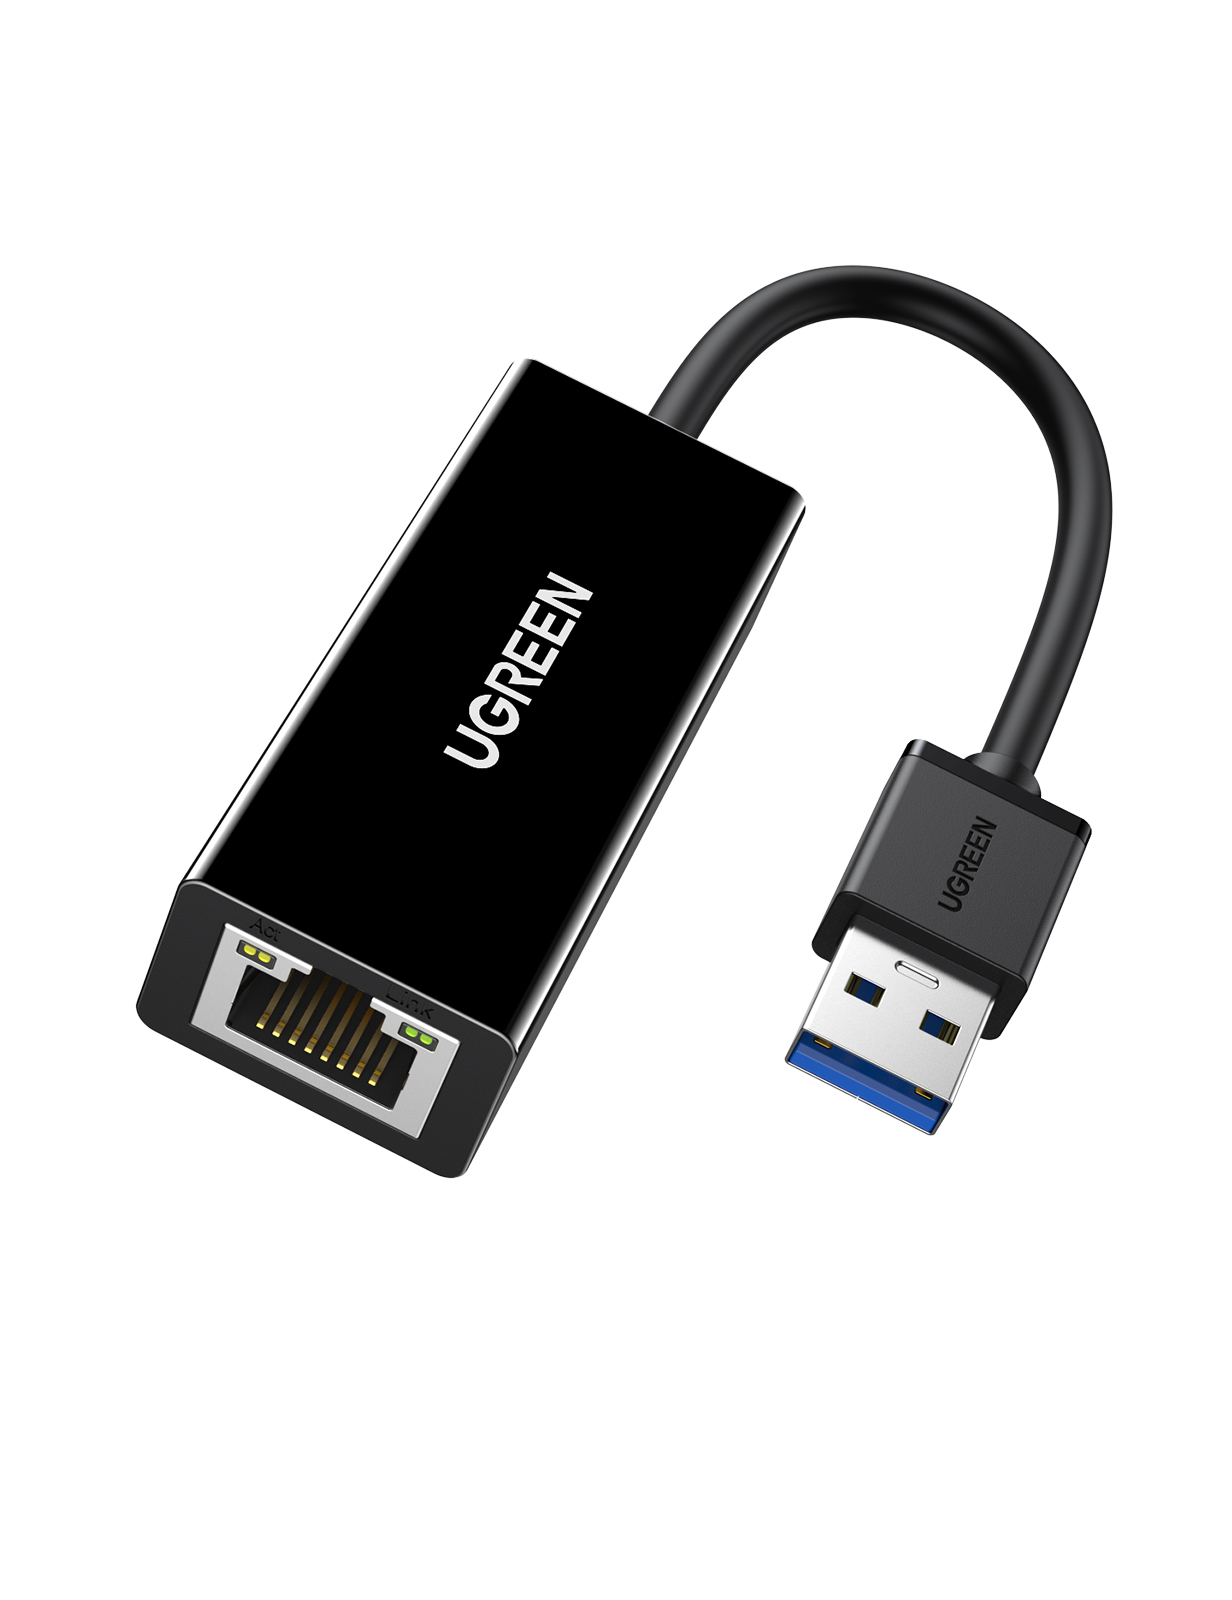 UGREEN USB 3.0 Gigabit Ethernet Adapter (Black) - OPENED BOX 73829